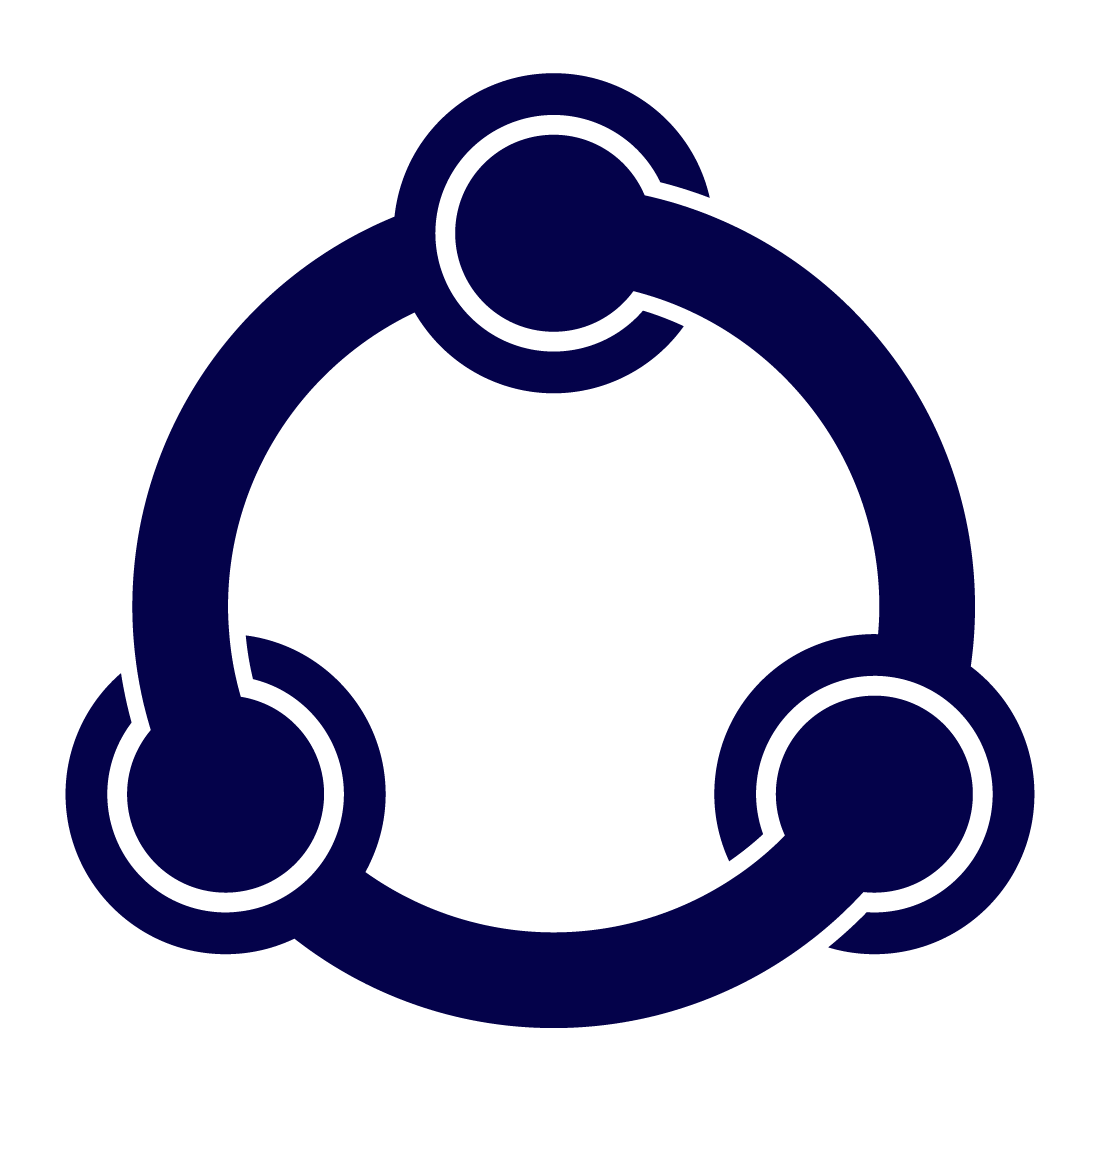 Unity-logo-e1600295269376